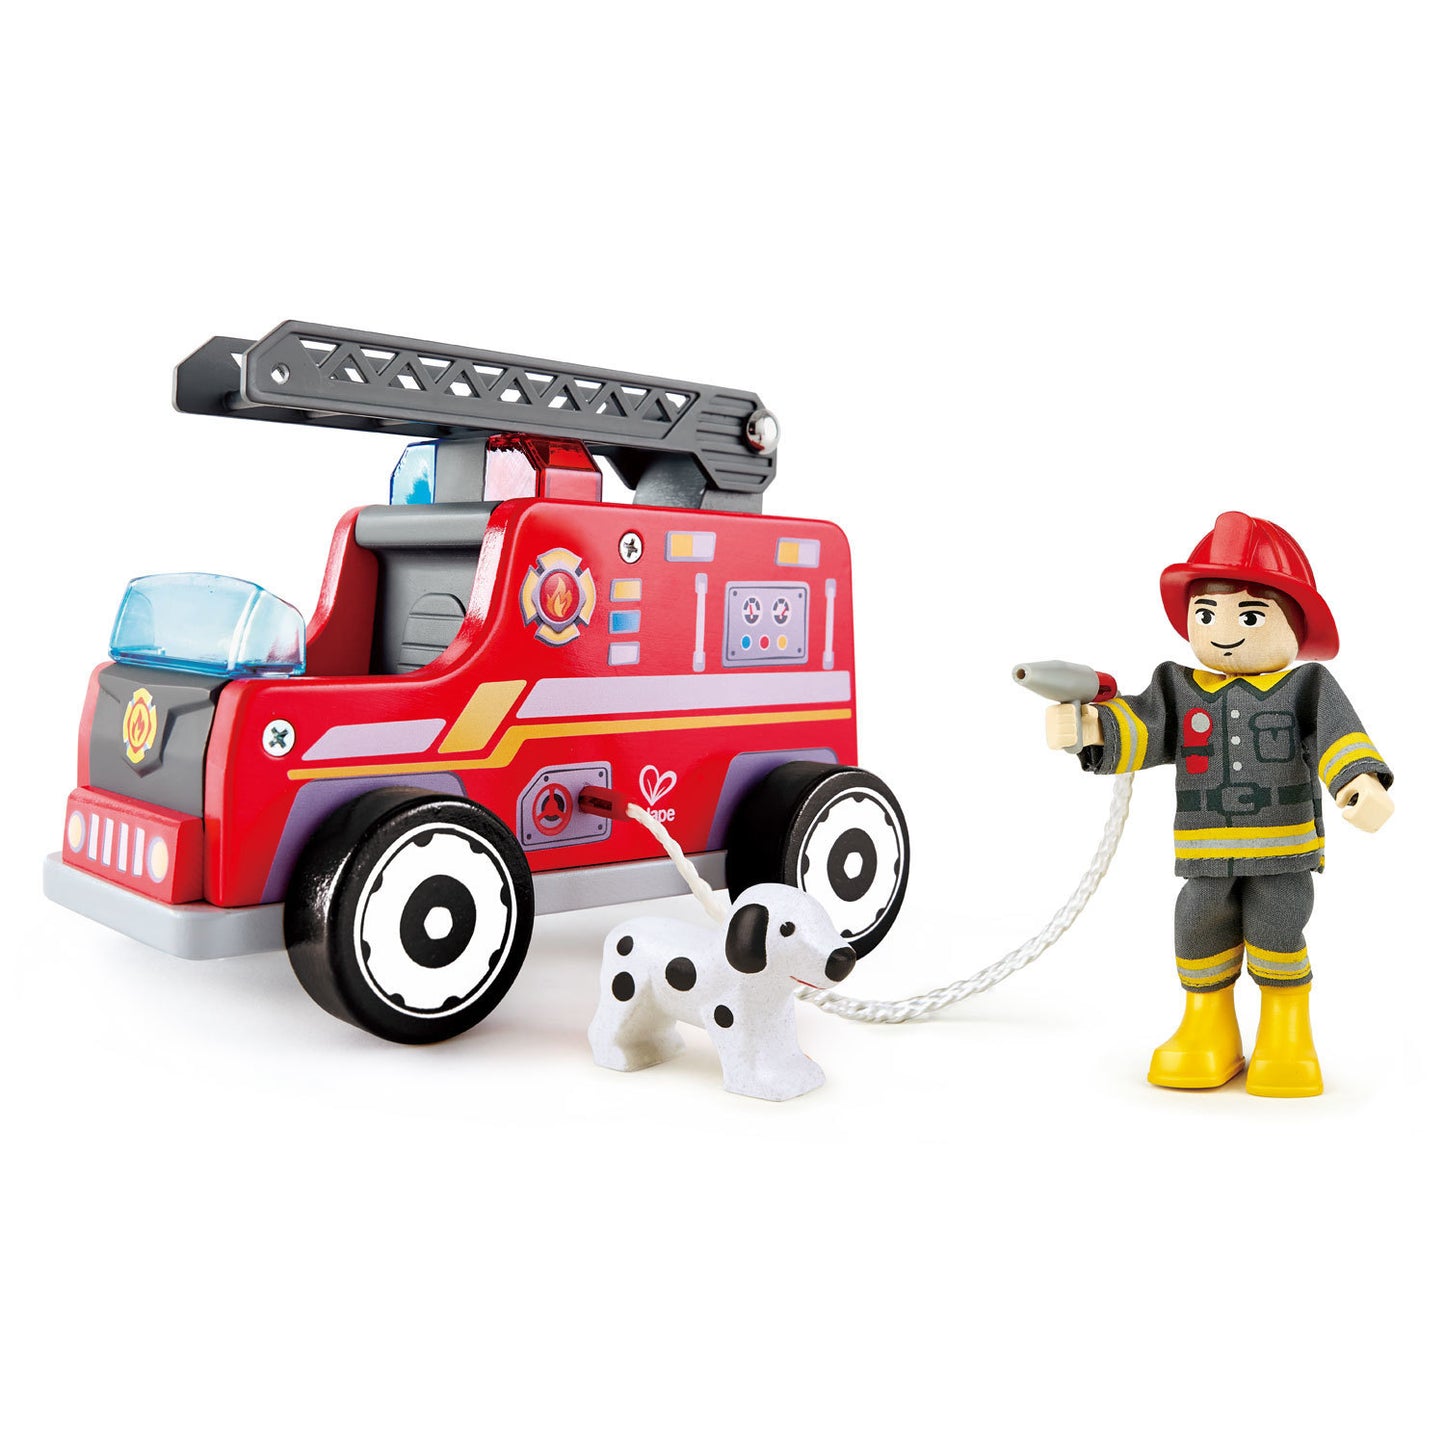 kidz-stuff-online - Fire Engine - Hape rescue truck